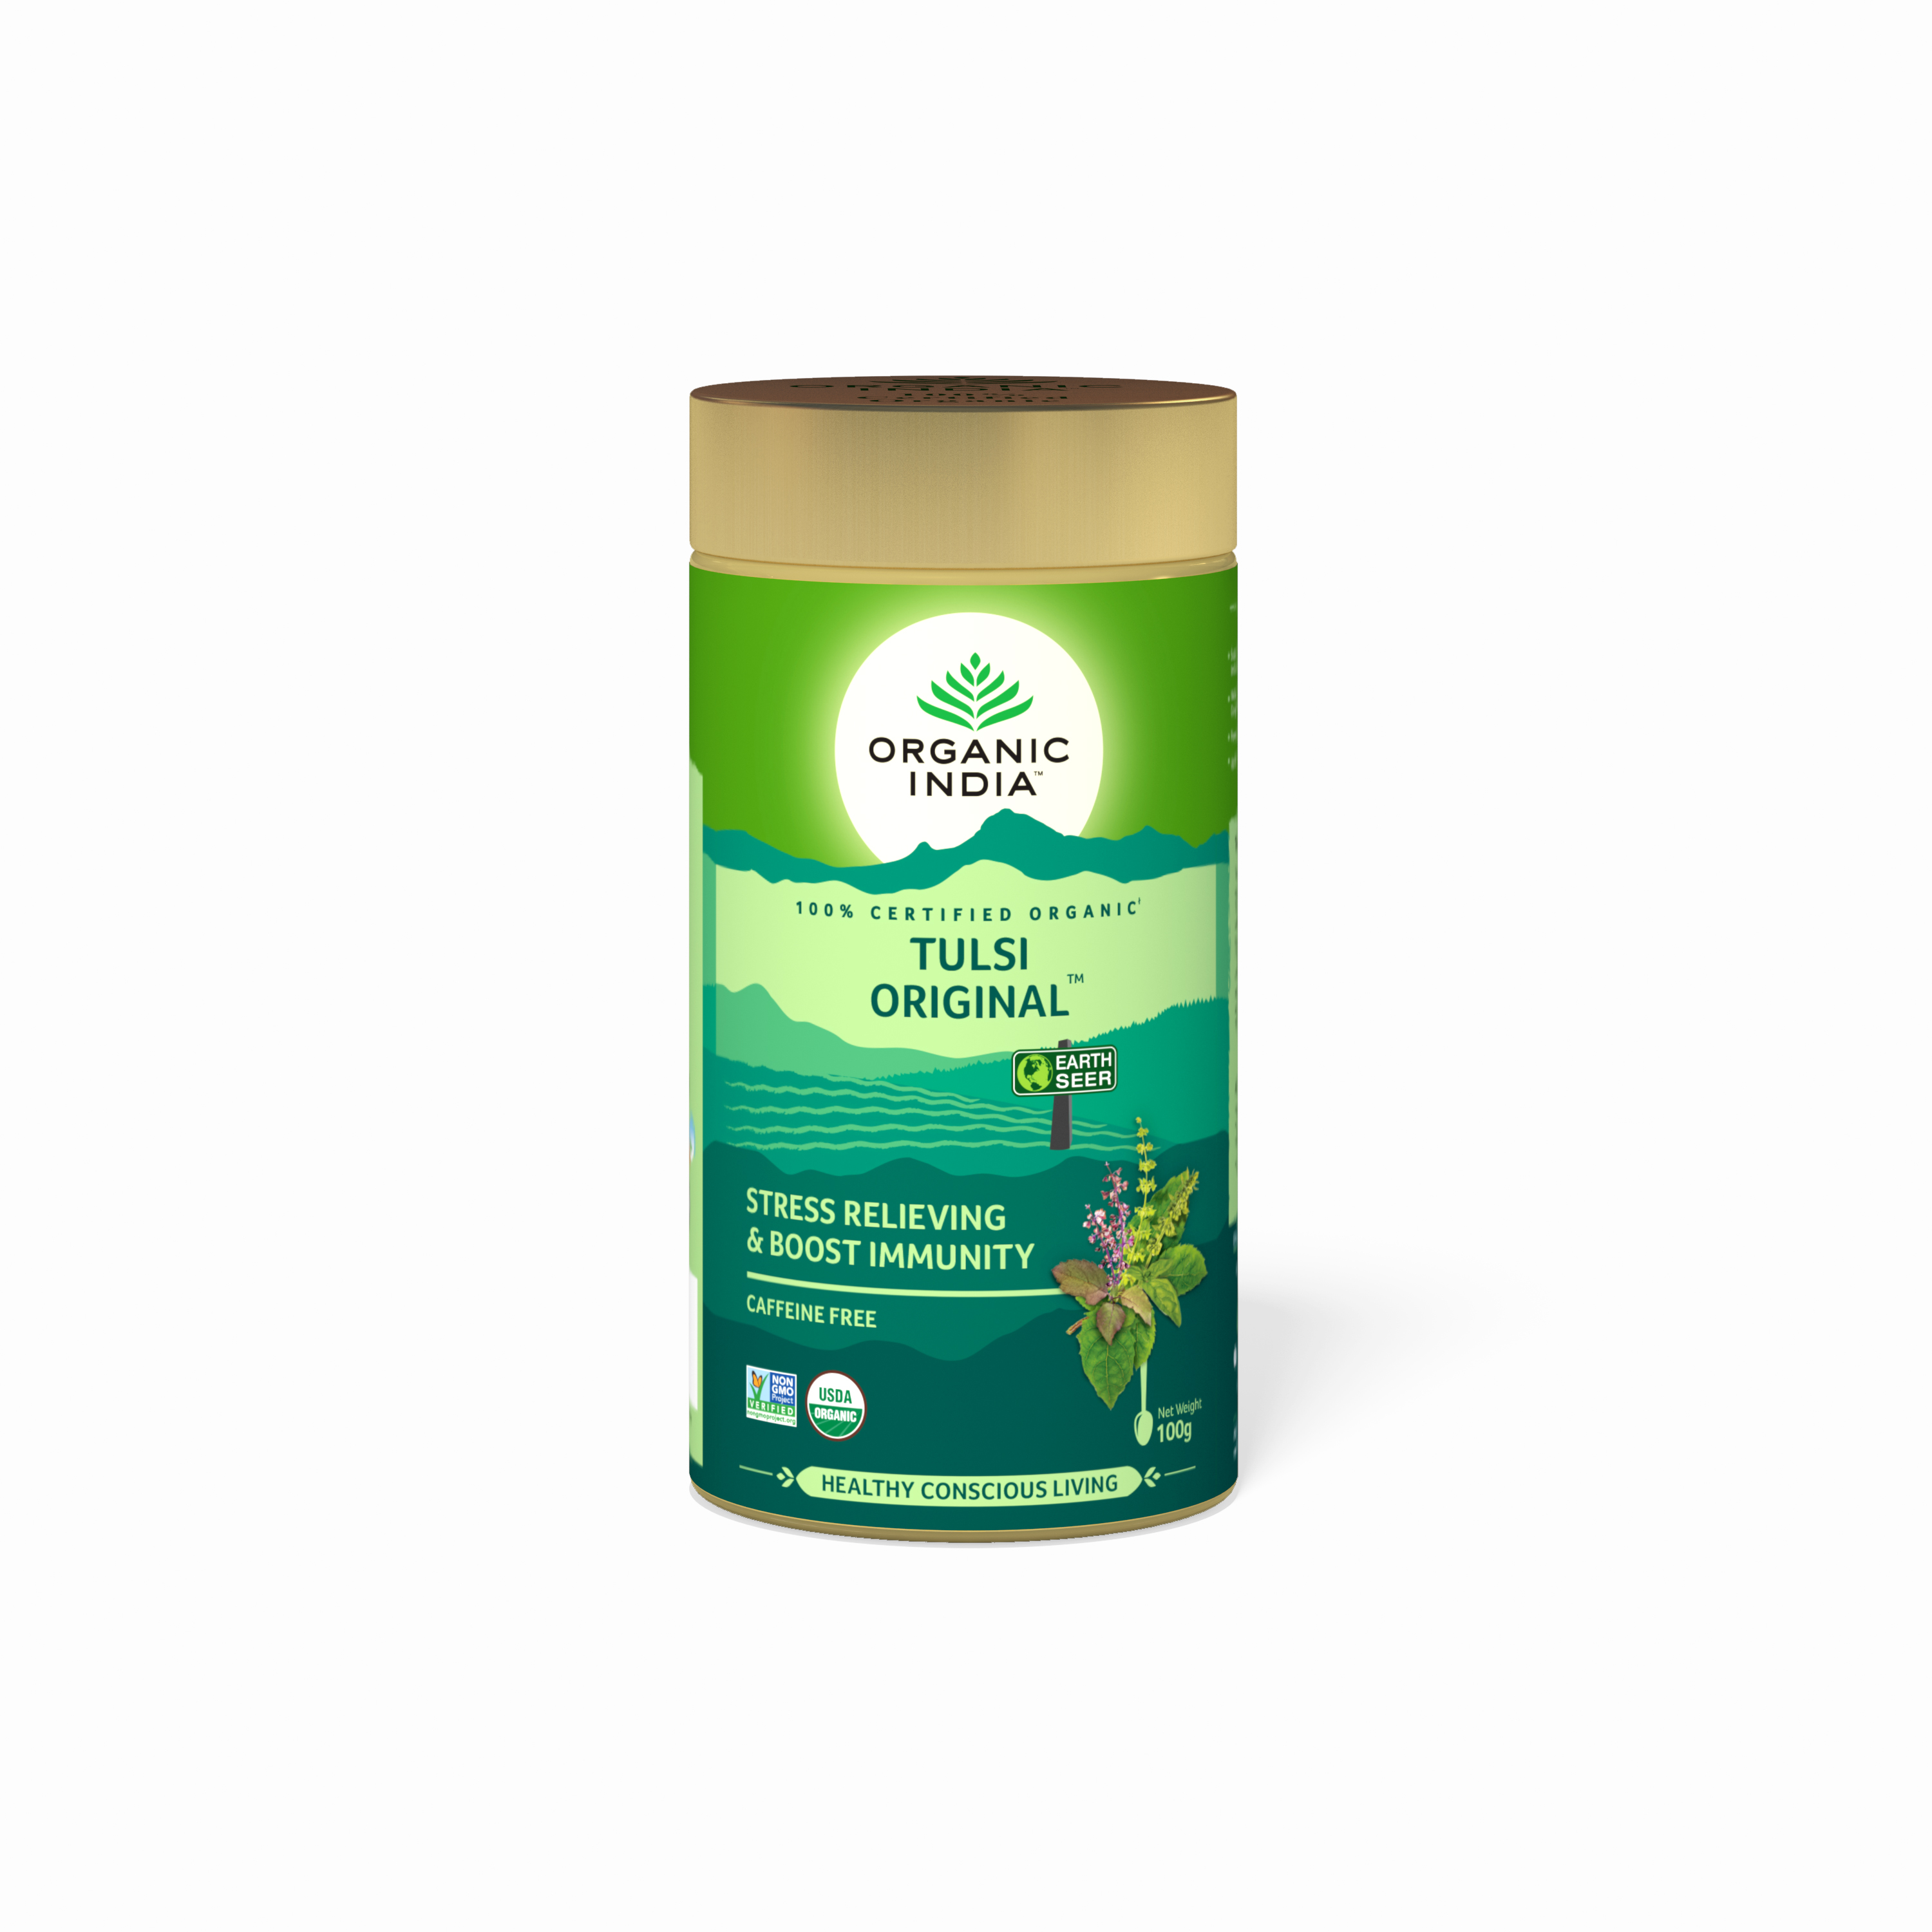 Buy Organic India Tulsi Original Tin at Best Price Online